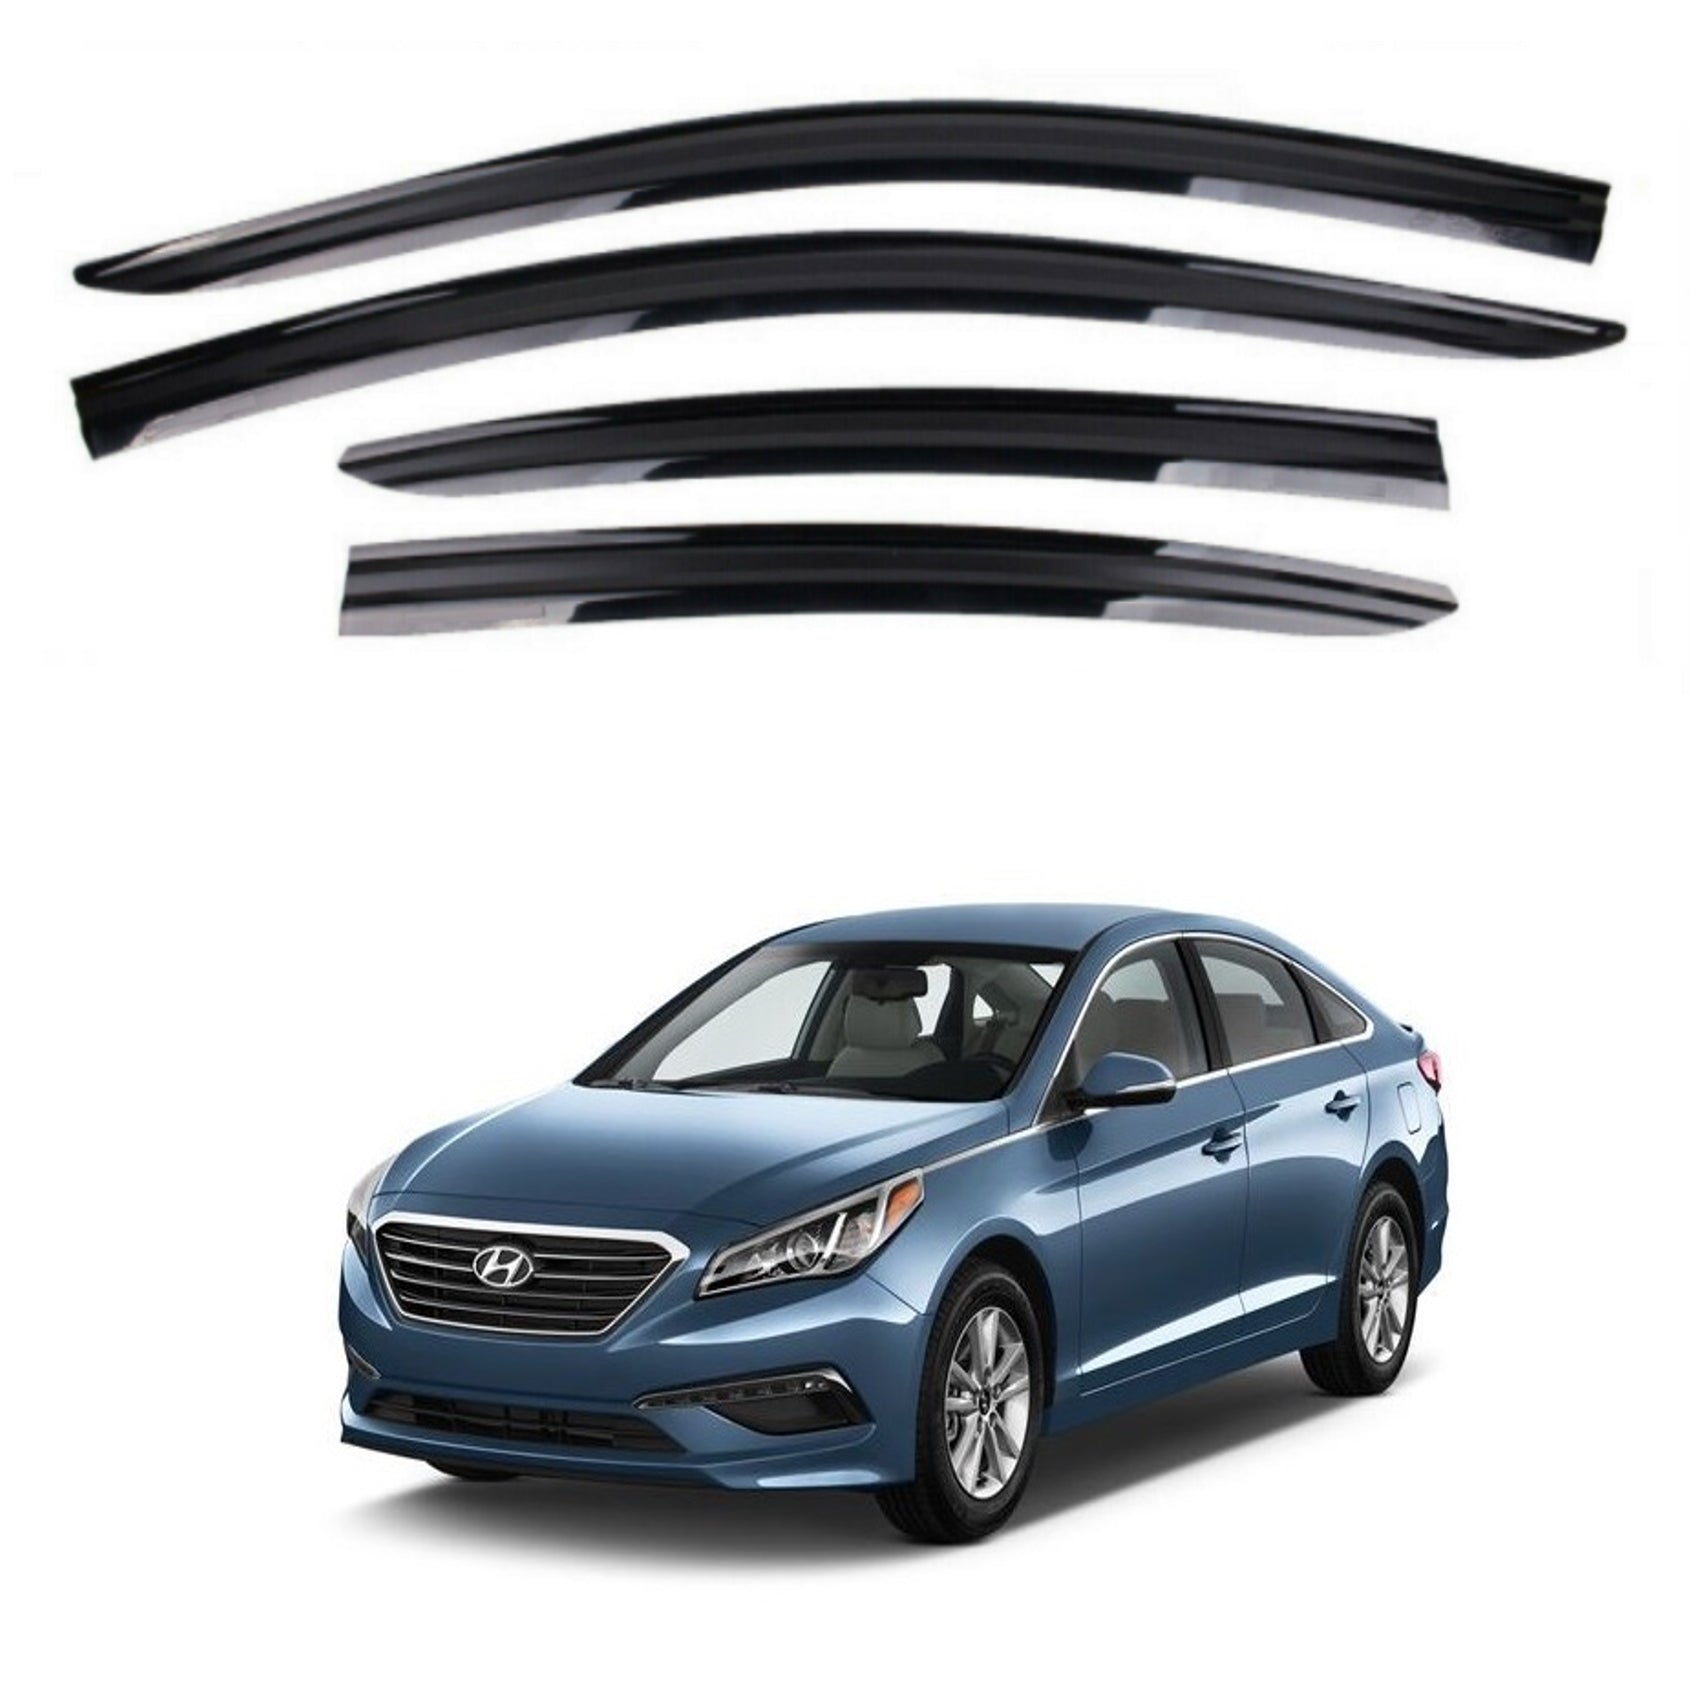 GY003133LP Car Accessories Vent Visor 4 Pieces Window Visors Vent Deflector Tape-on Rain Guards Goodyear Side Window Deflectors for Hyundai Sonata 2015-2019 